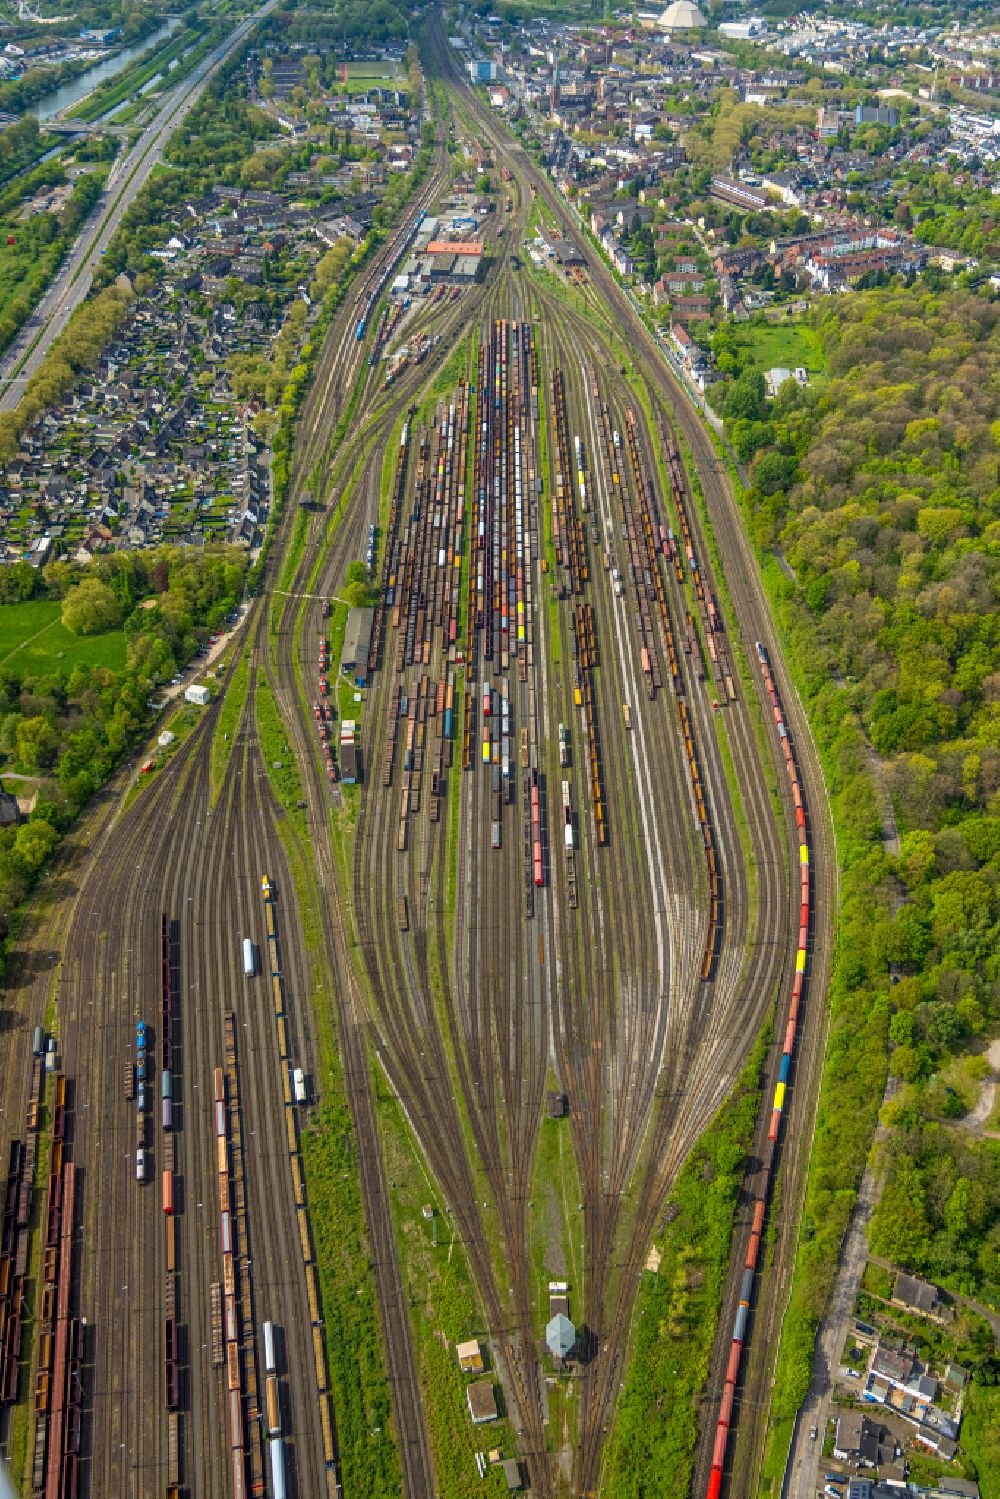 Aerial image Oberhausen - Marshalling yard and freight station of the Deutsche Bahn in Oberhausen in the state North Rhine-Westphalia, Germany